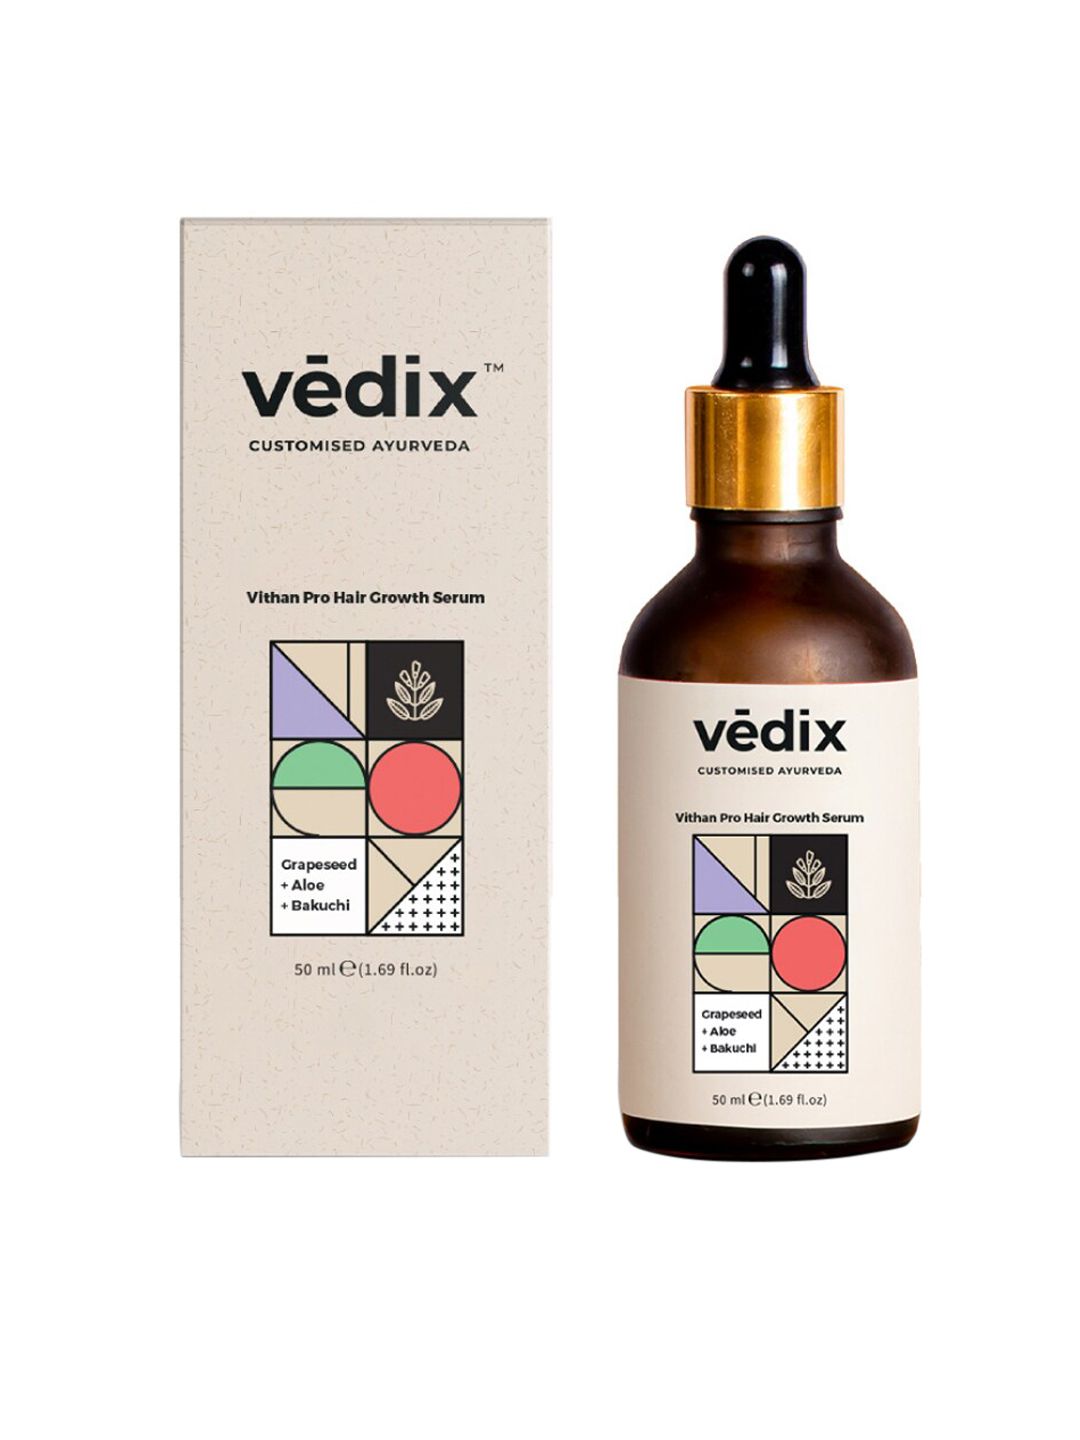 VEDIX Women Customized Ayurvedic Vithan Pro Hair Serum For Hair Growth - 50 ml Price in India